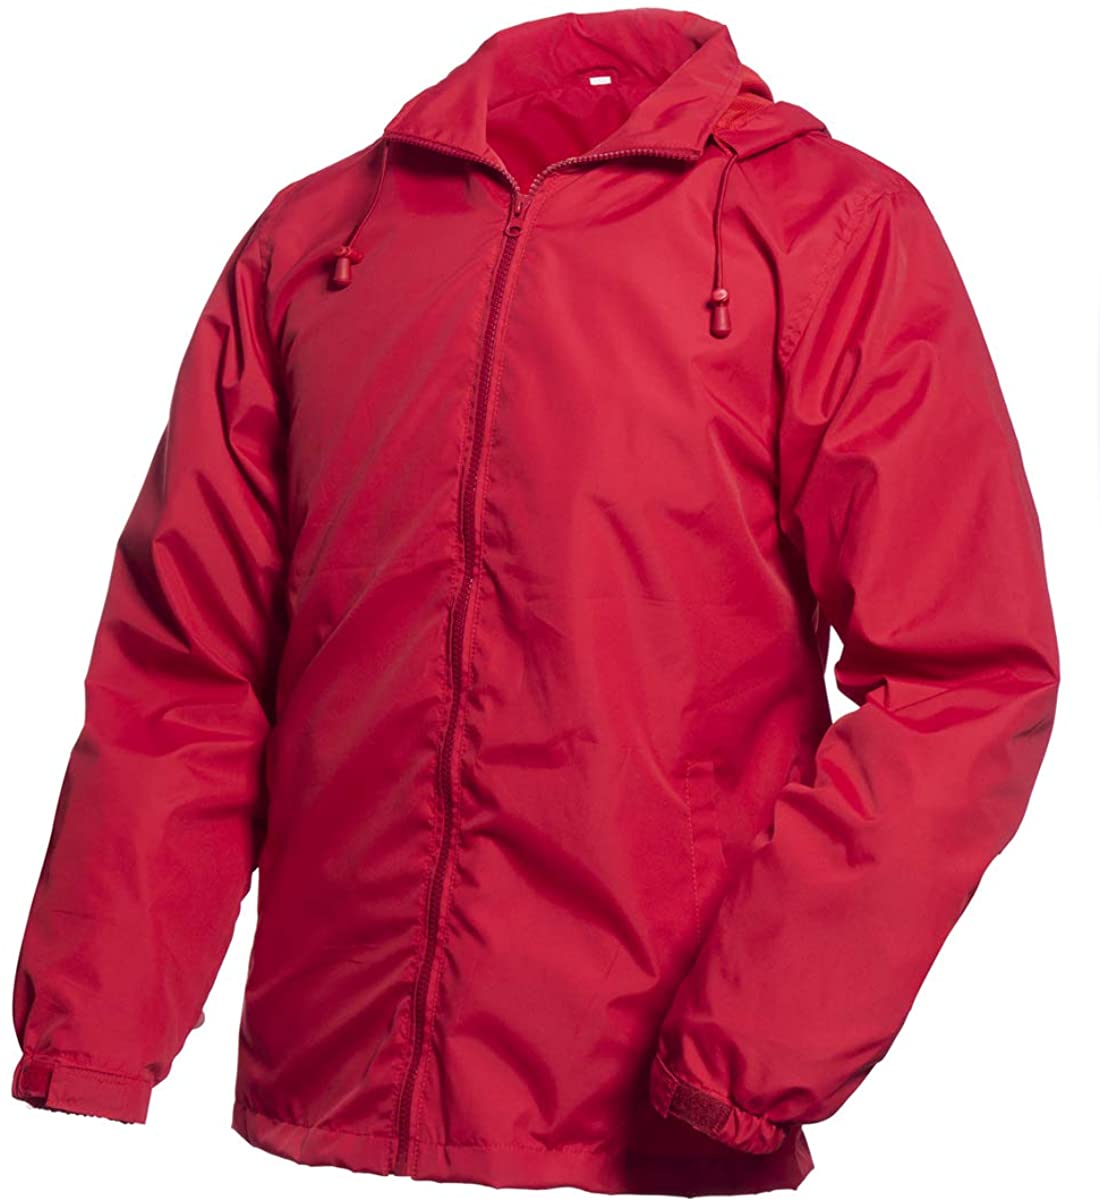 MADHERO Men Windbreaker Removable Hood Lightweight Water-Resistant Rain Jacket 